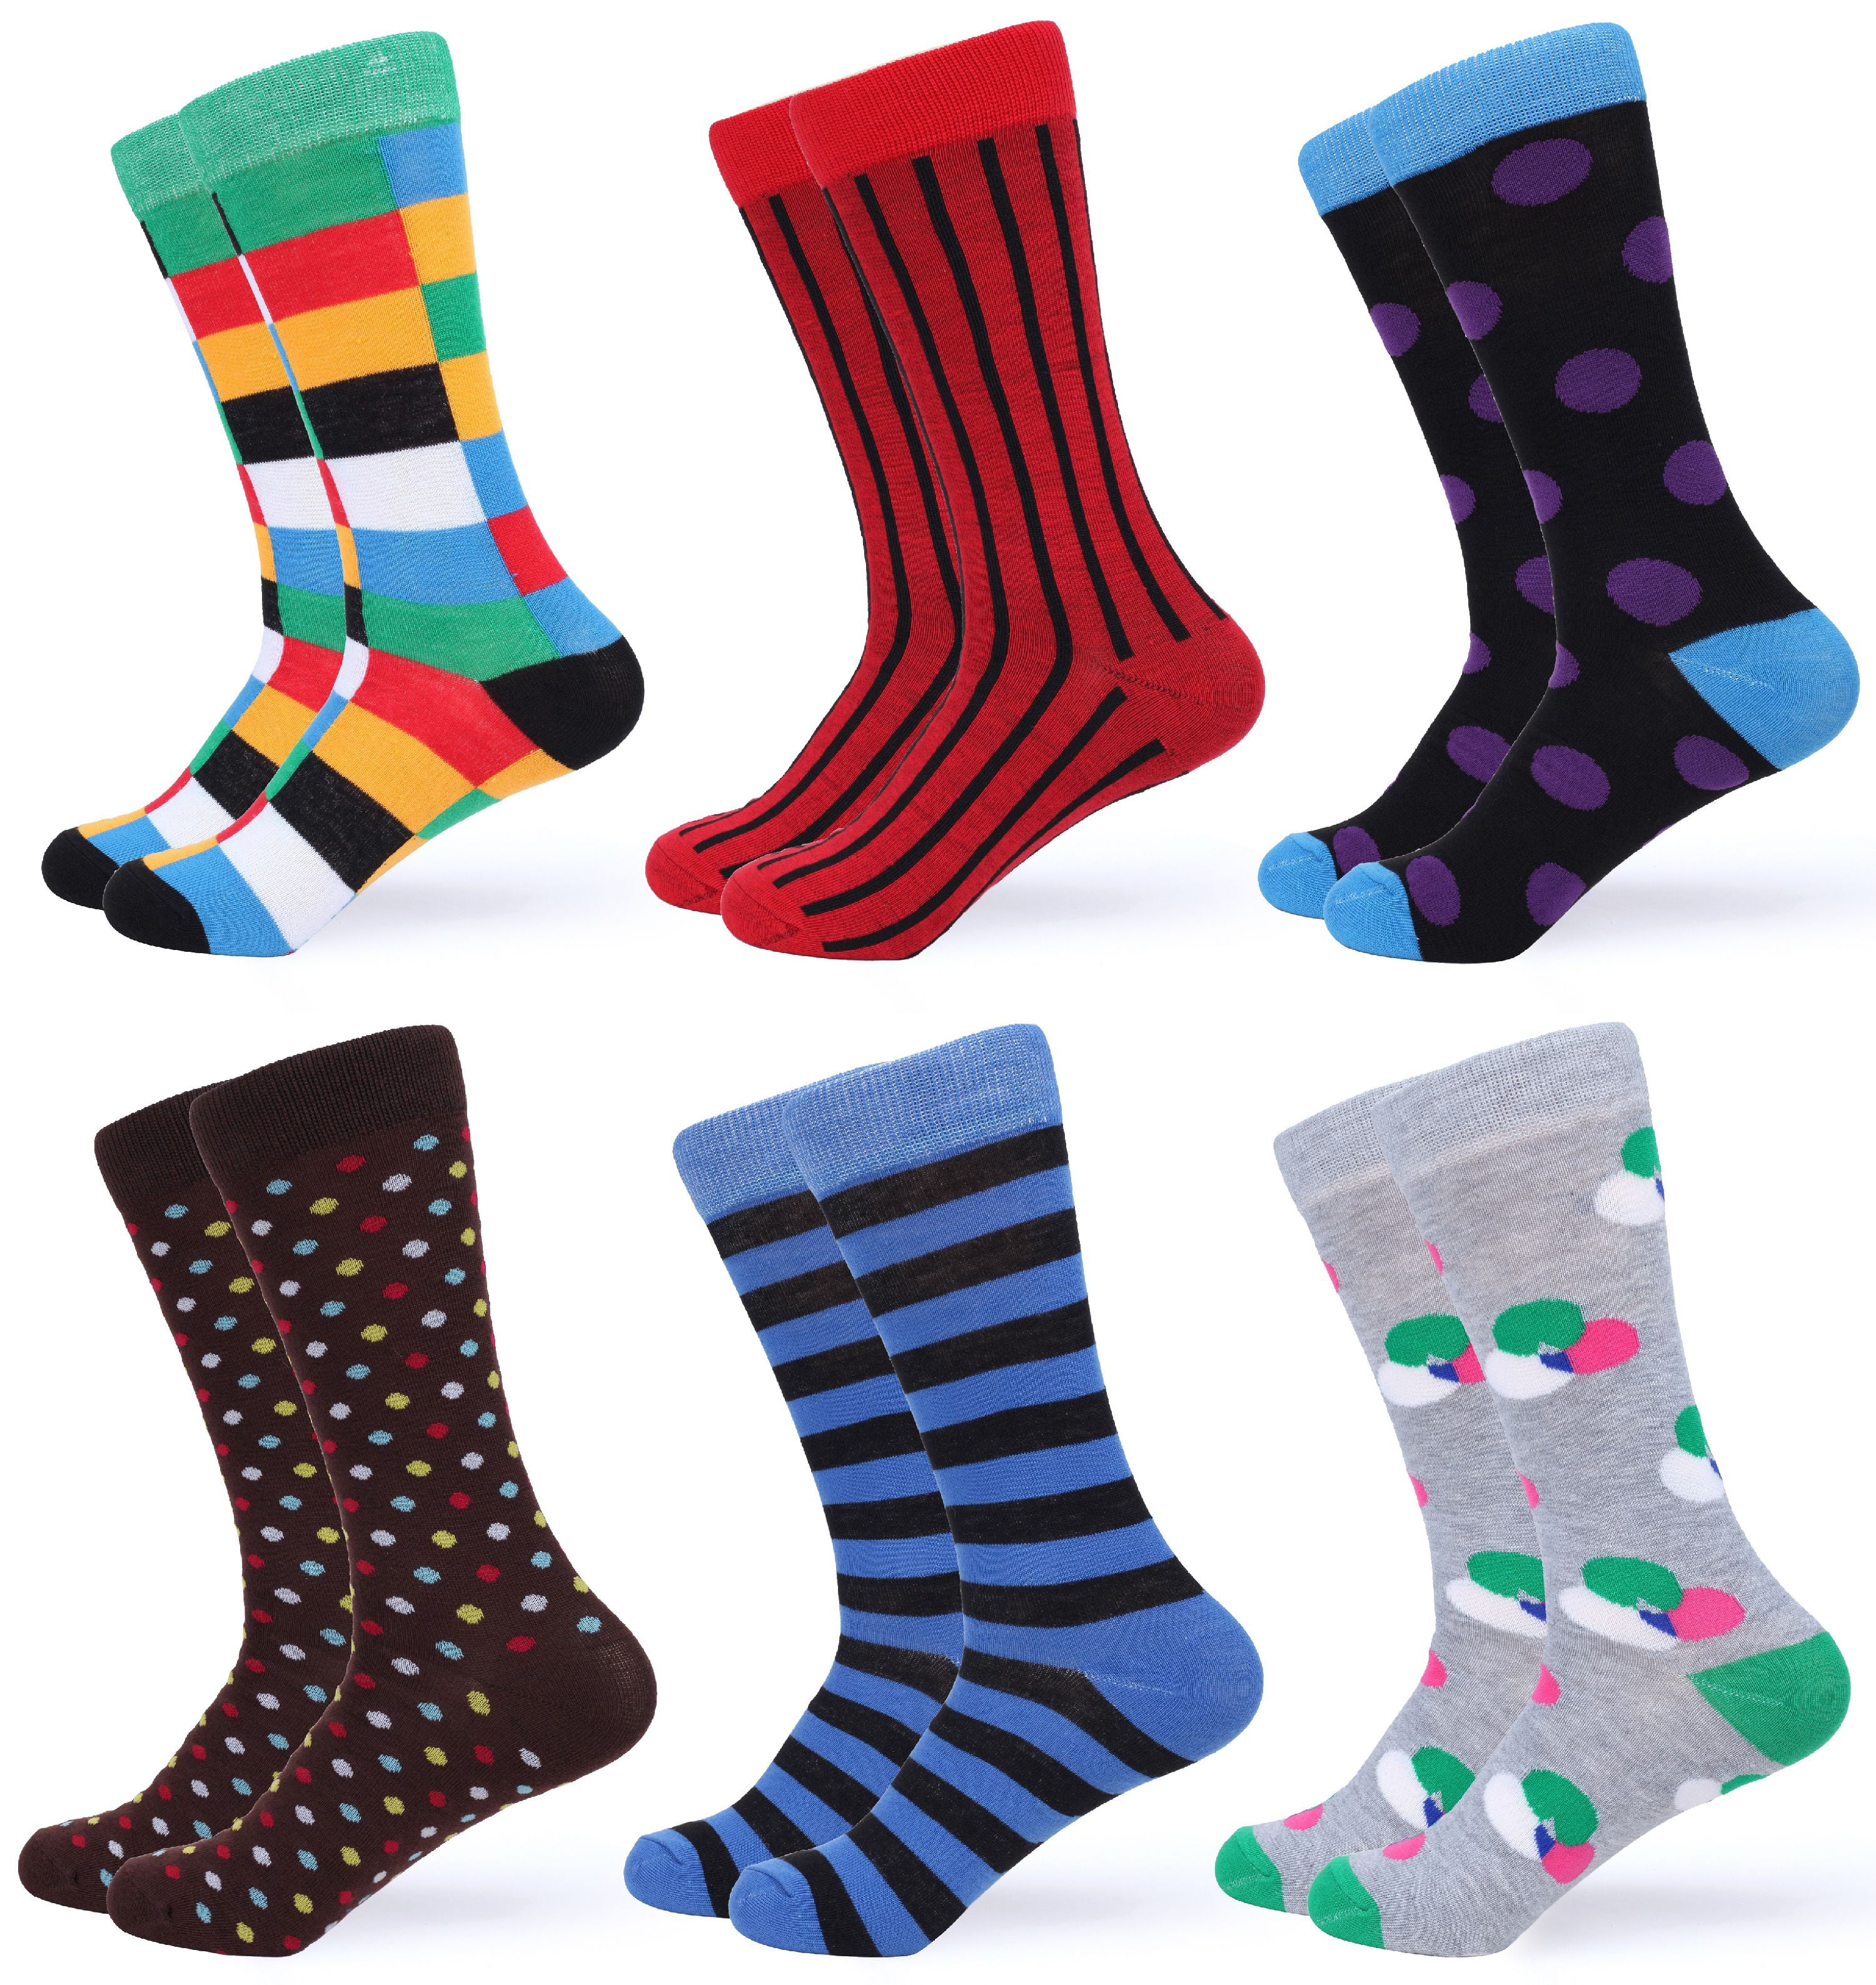 6 Pack Cool Bright Casual Fun Cotton Novelty Crew Socks Bleu Nero Mens Colorful Dress Socks for Men 